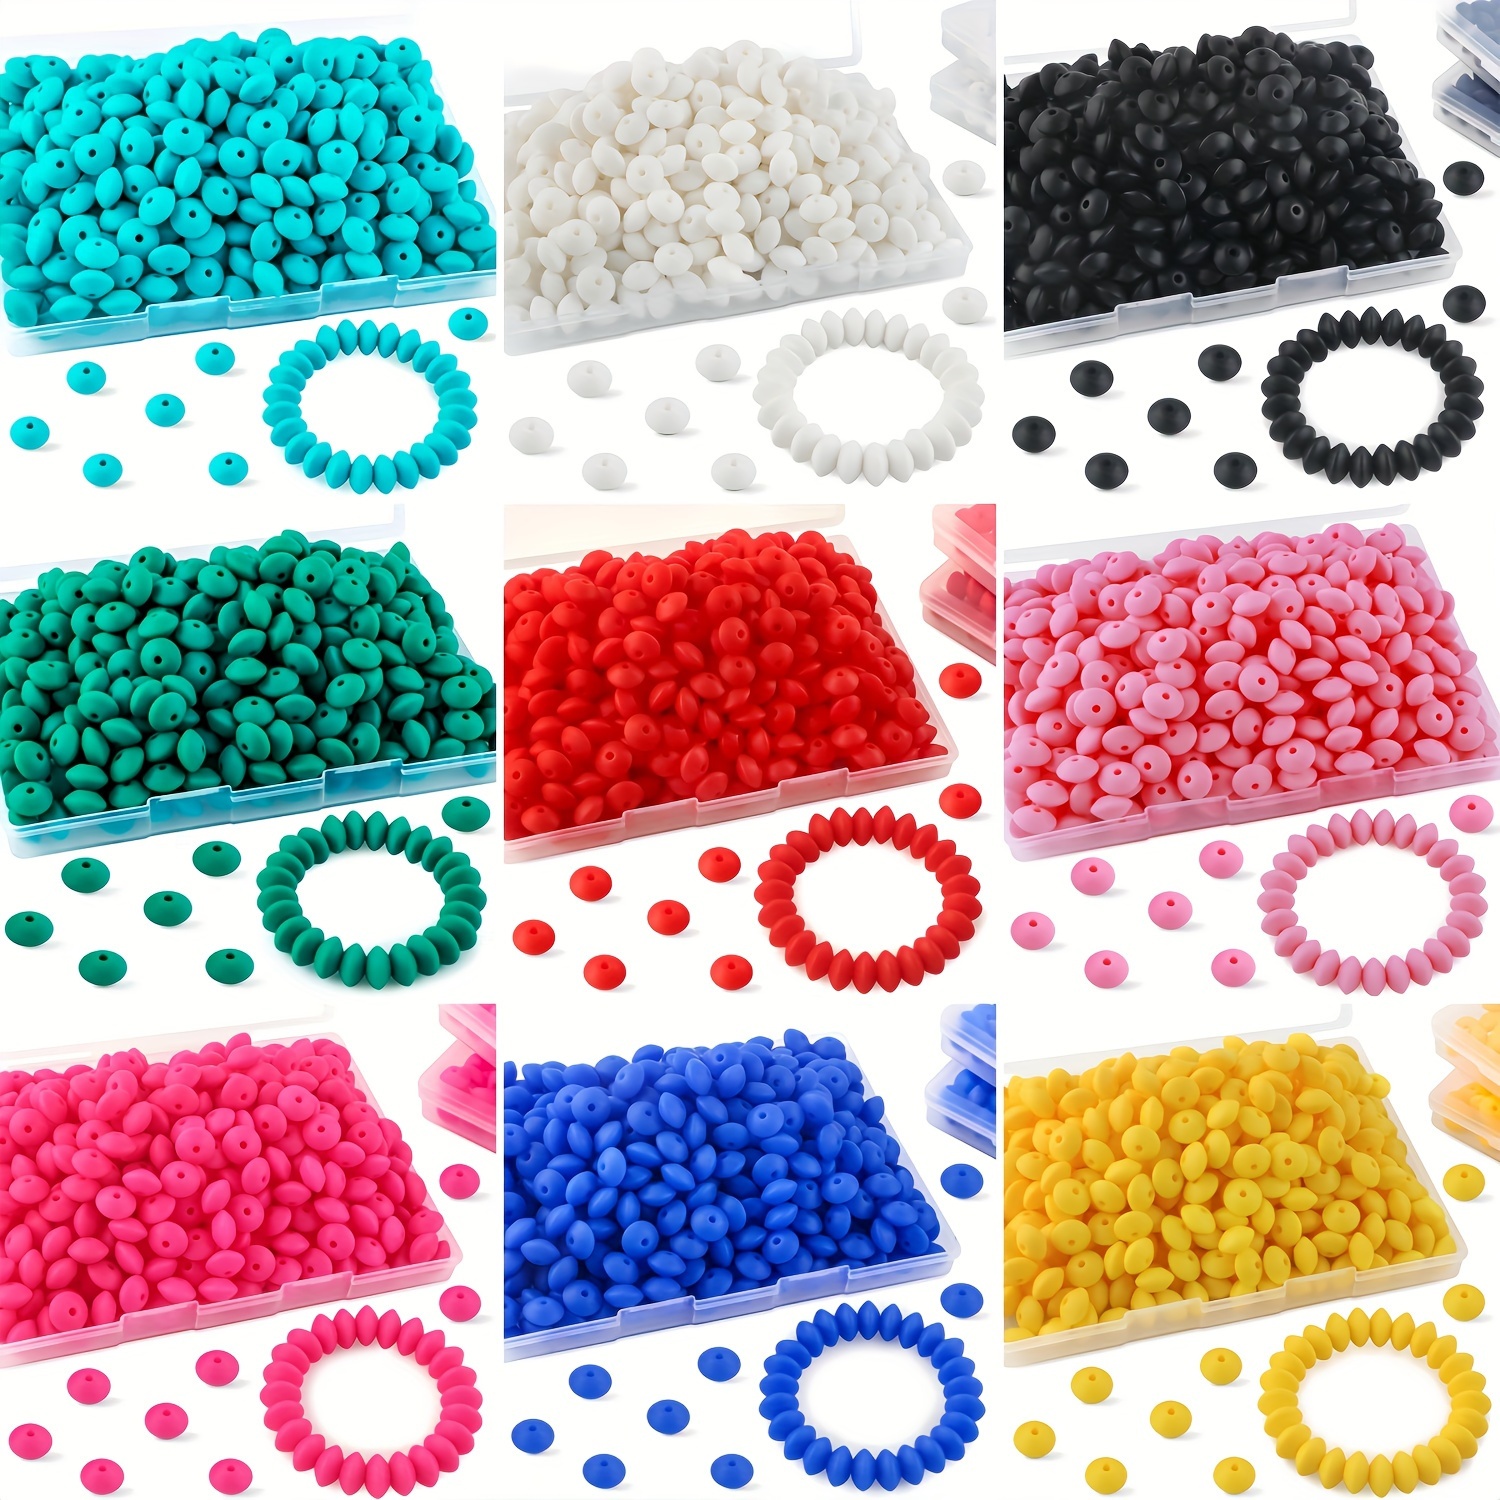 

Bulk Piece Of 30/100/200 Pcs 12mm Silicone Lentil Beads - Versatile Crafting Beads For Diy Keychains, Necklaces, Bracelets & Pen Decorations